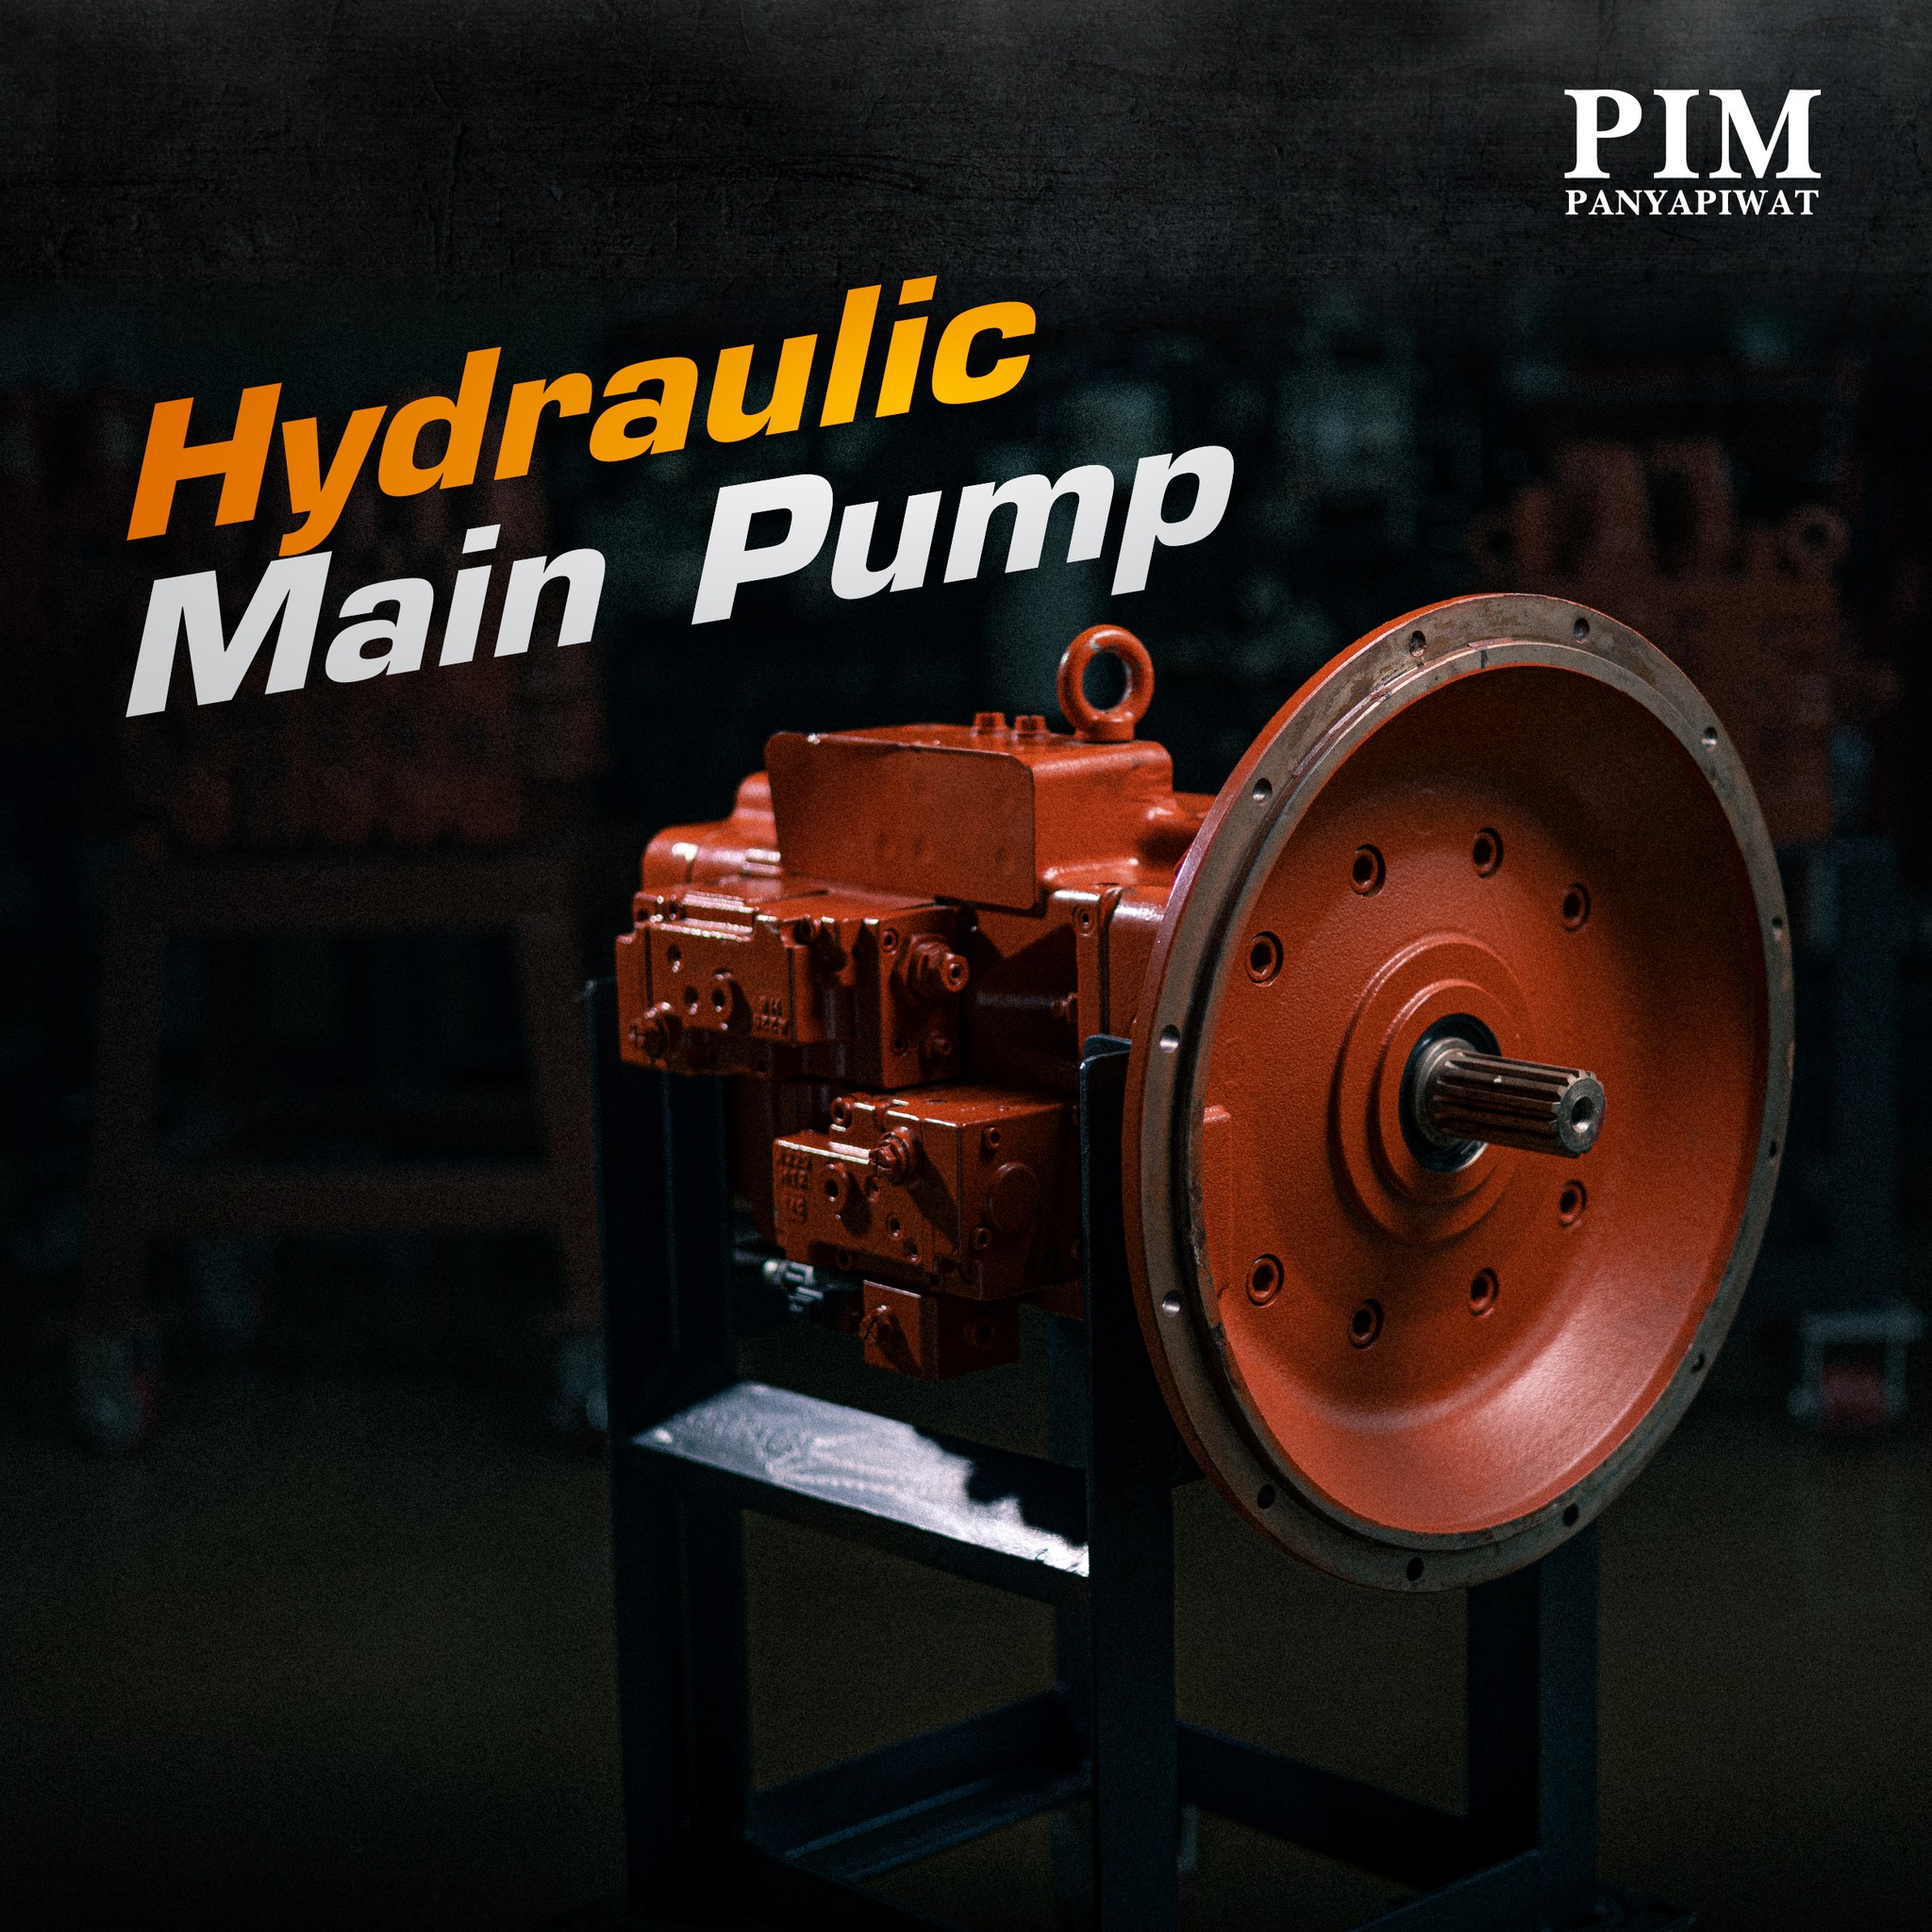 Hydraulic Main Pump ปั๊มหลัก/ปั๊มไฮดรอลิก (Main Pump)